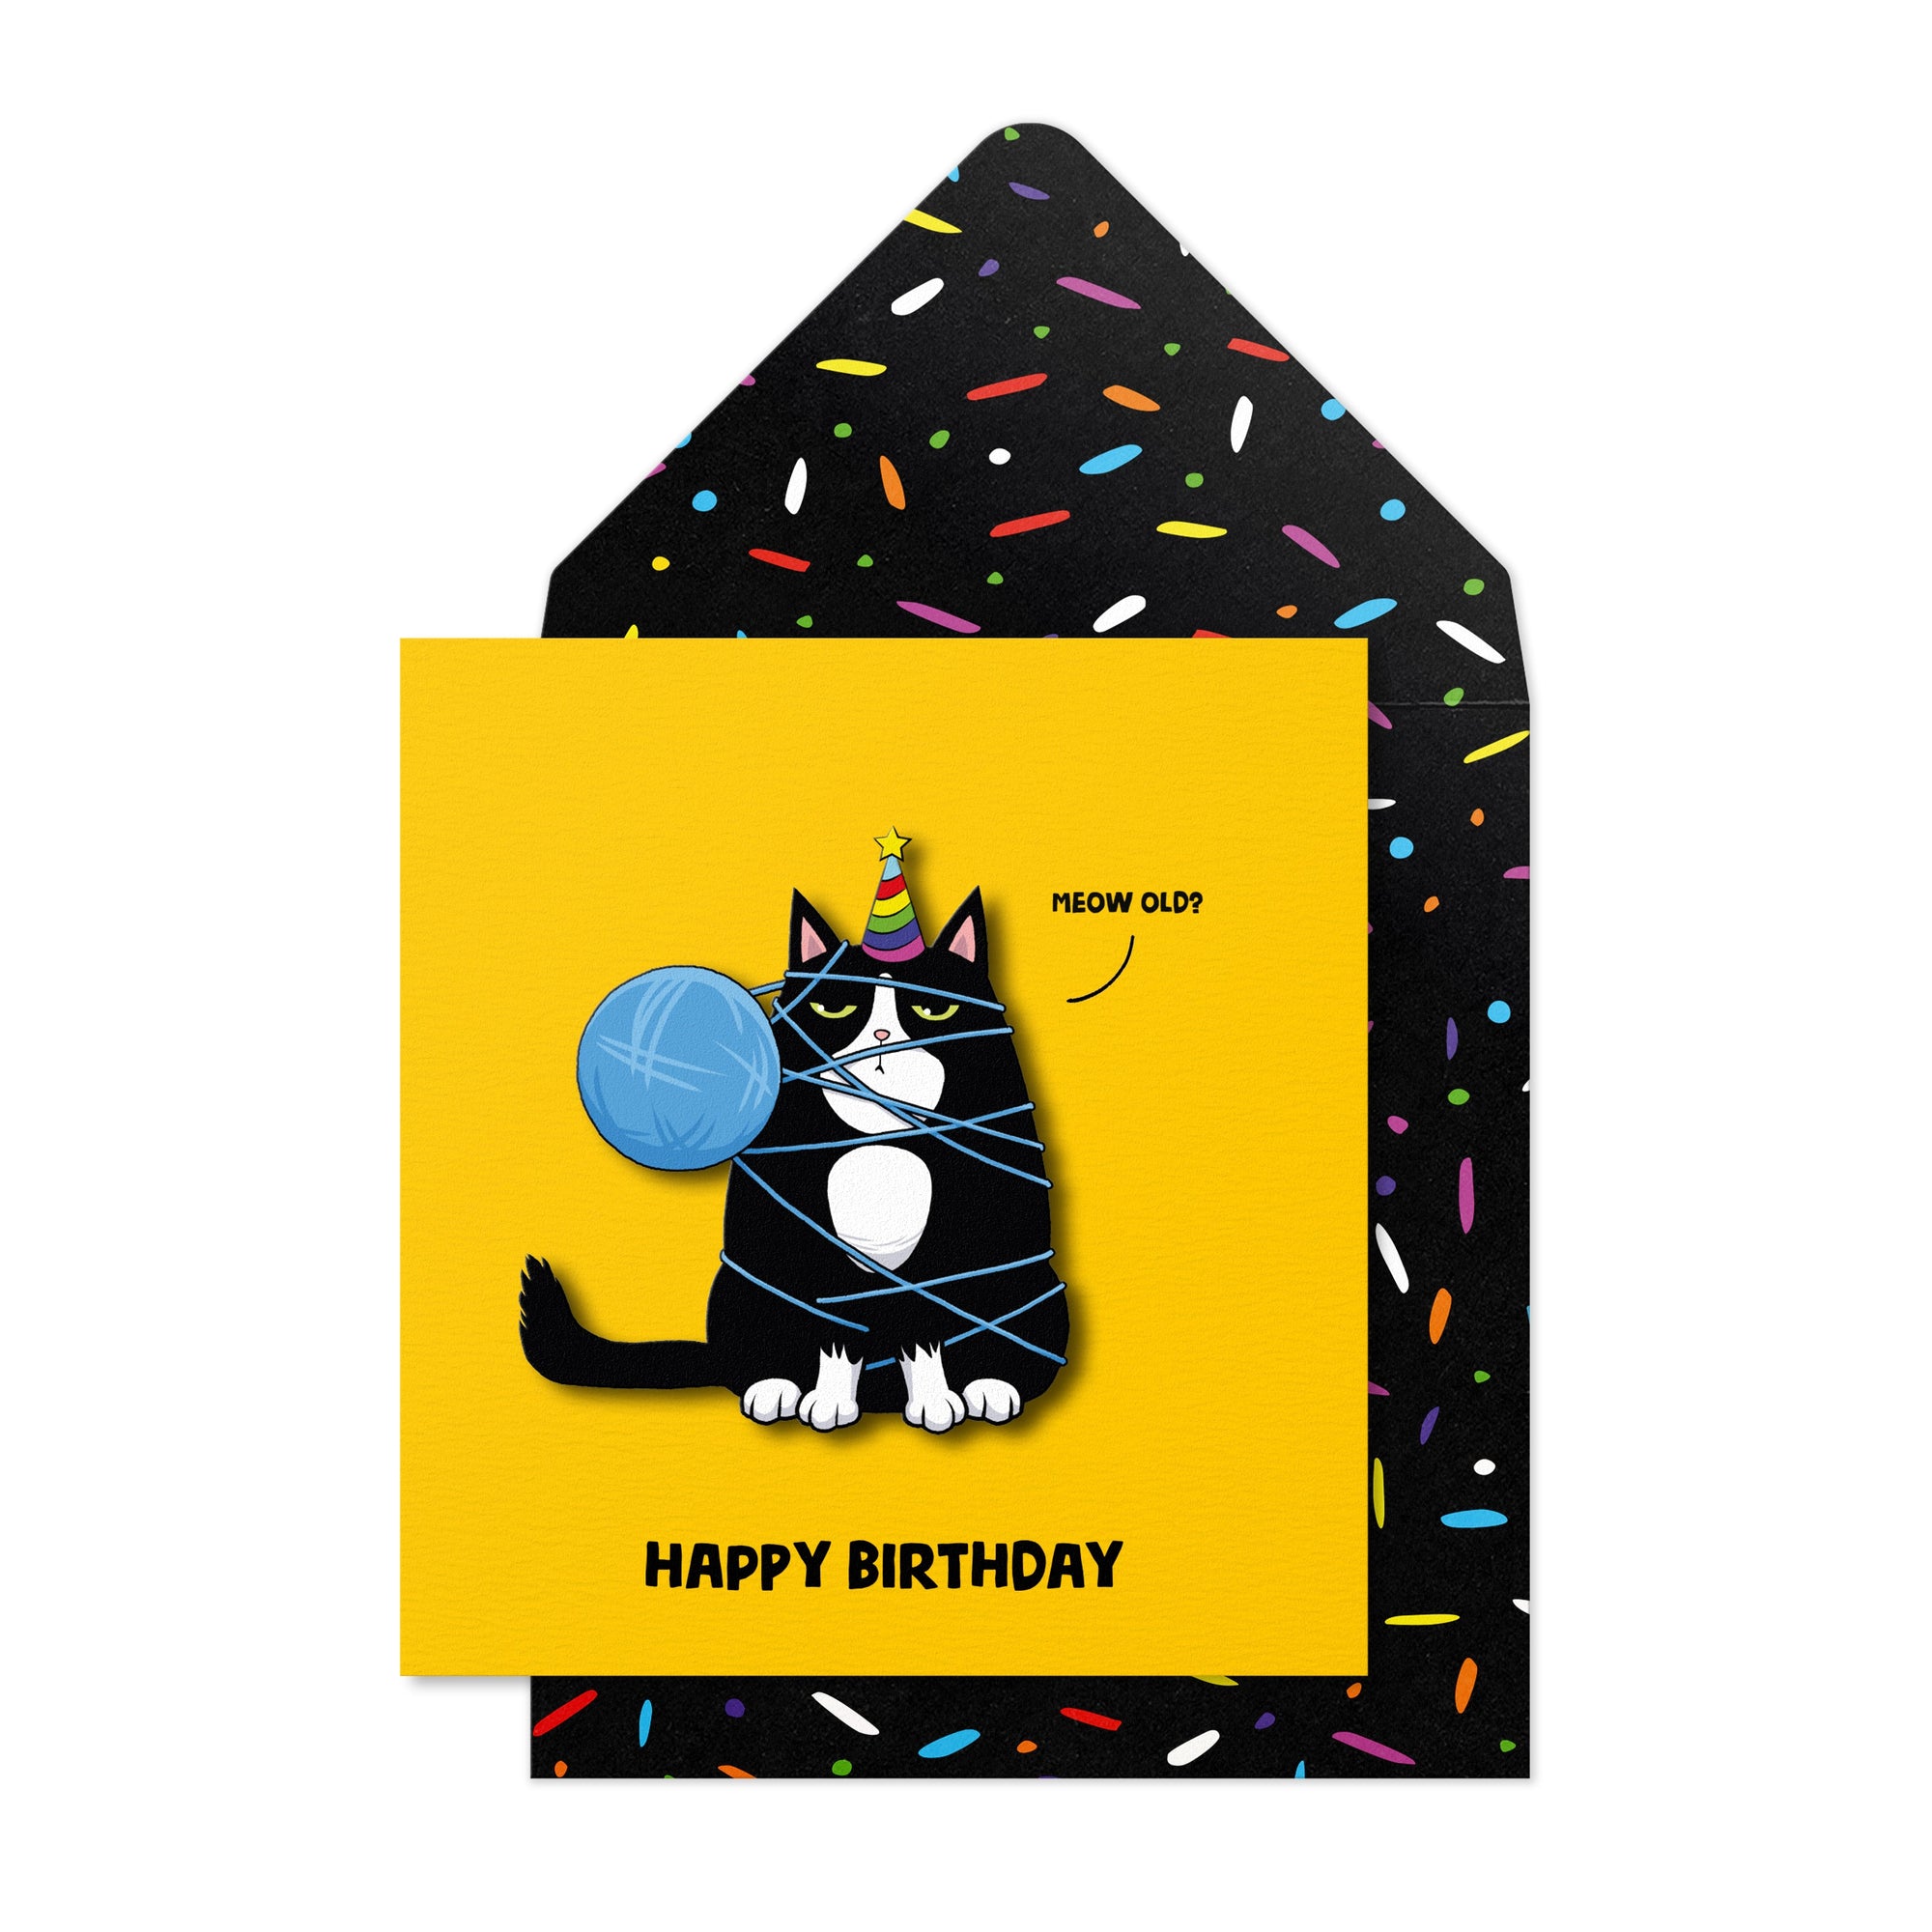 Happy Birthday, Meow Old?